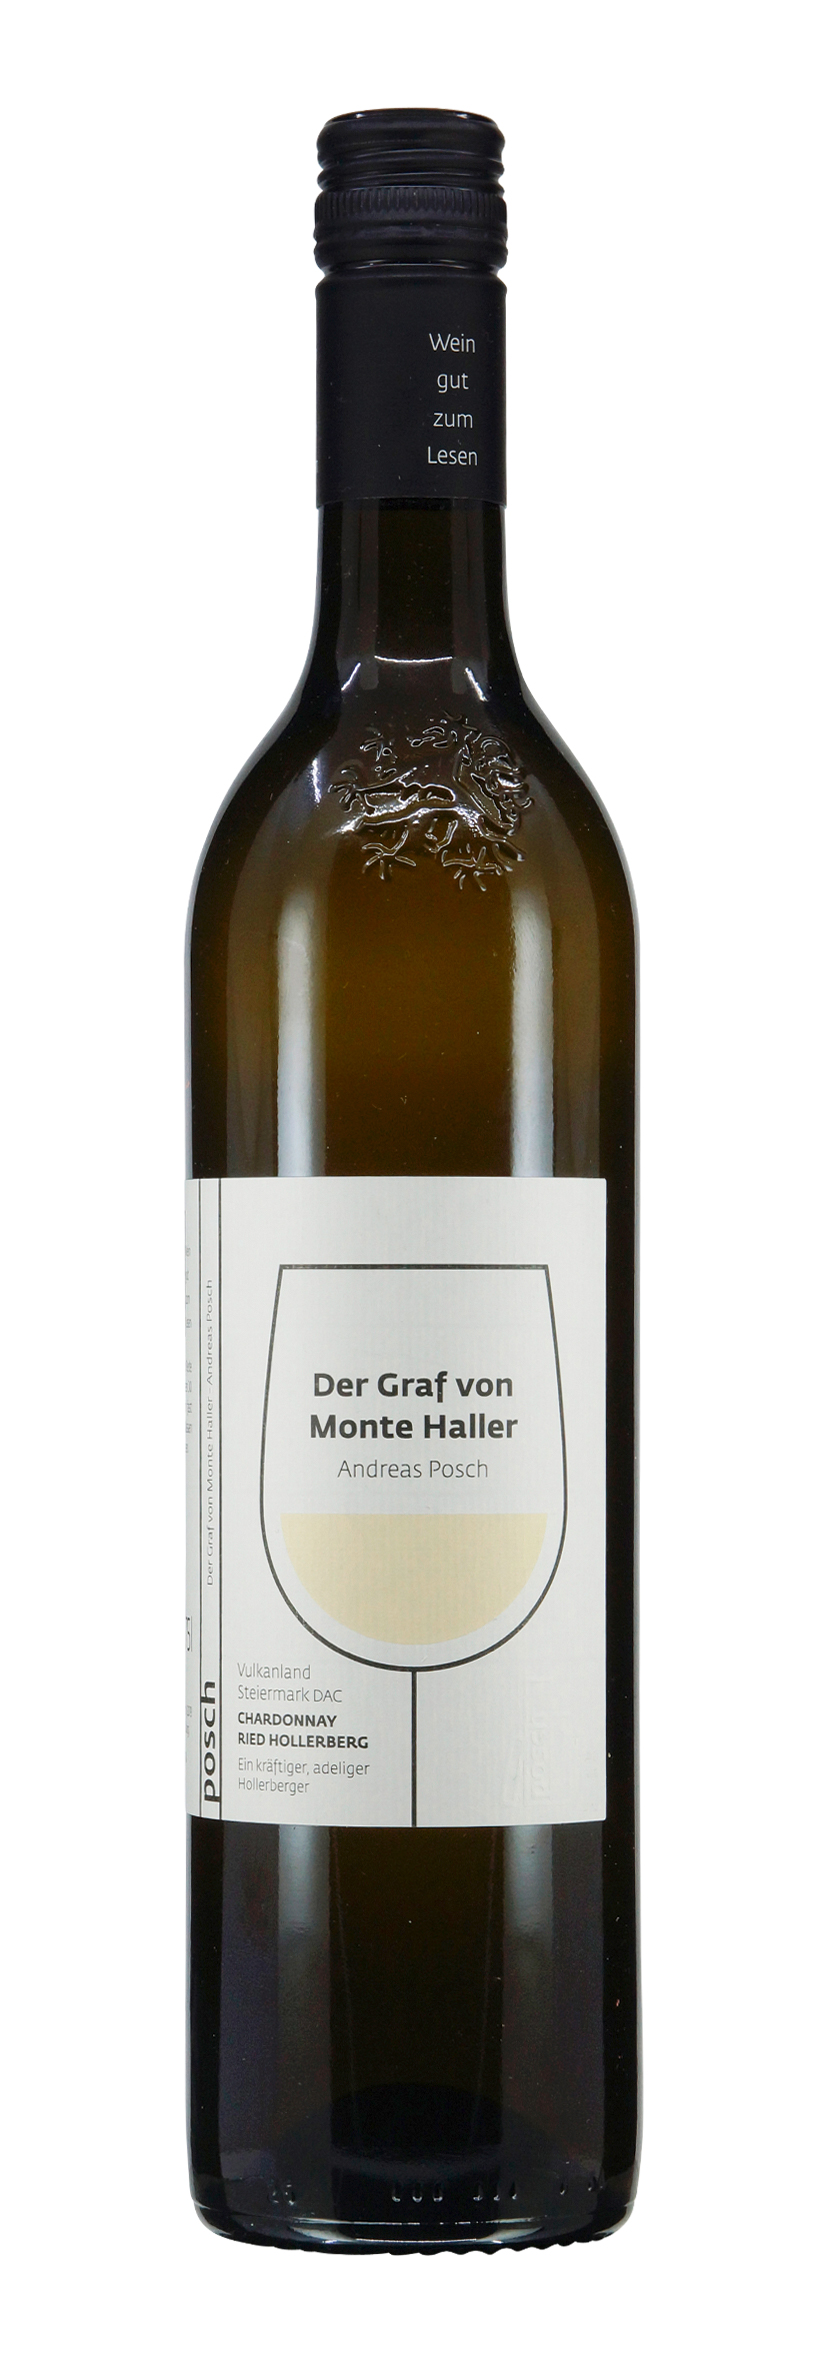 Vulkanland Steiermark DAC Ried Hollerberg Grande Reserve Chardonnay 2019